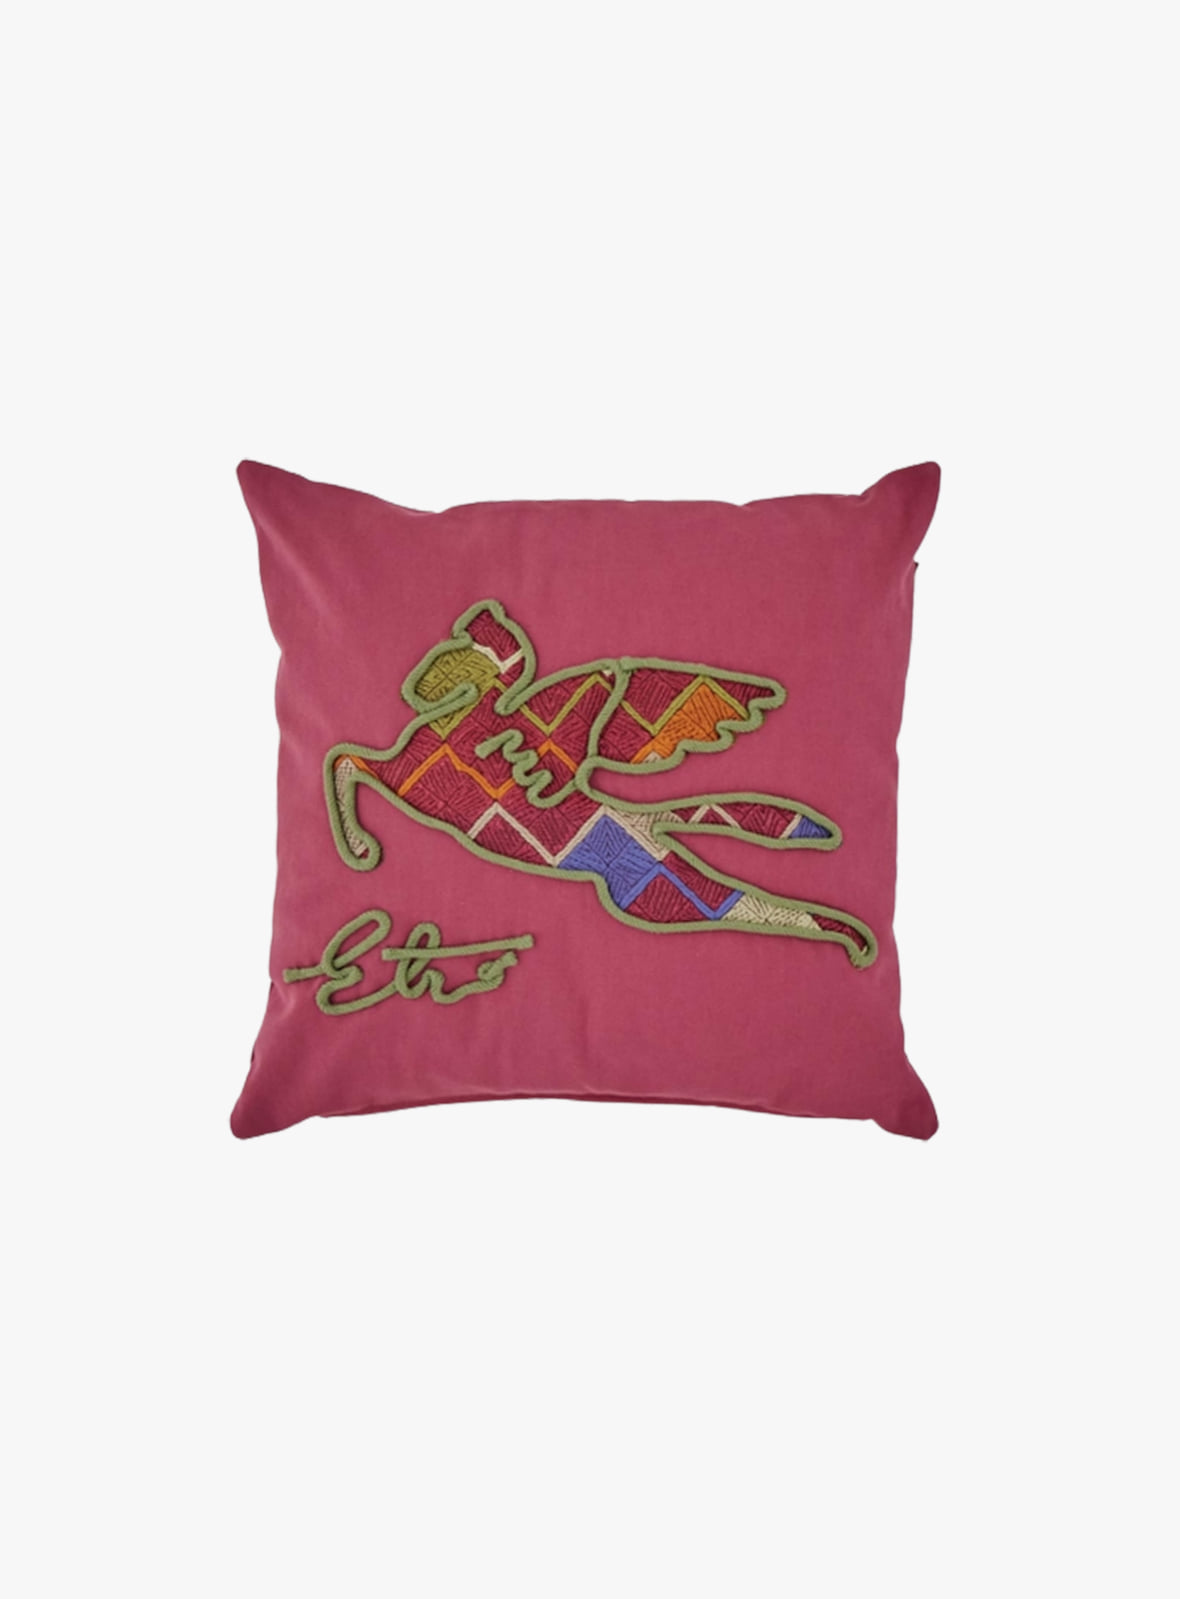 Etro - Etro Hot Pink Embroidered Cushion 495519211651